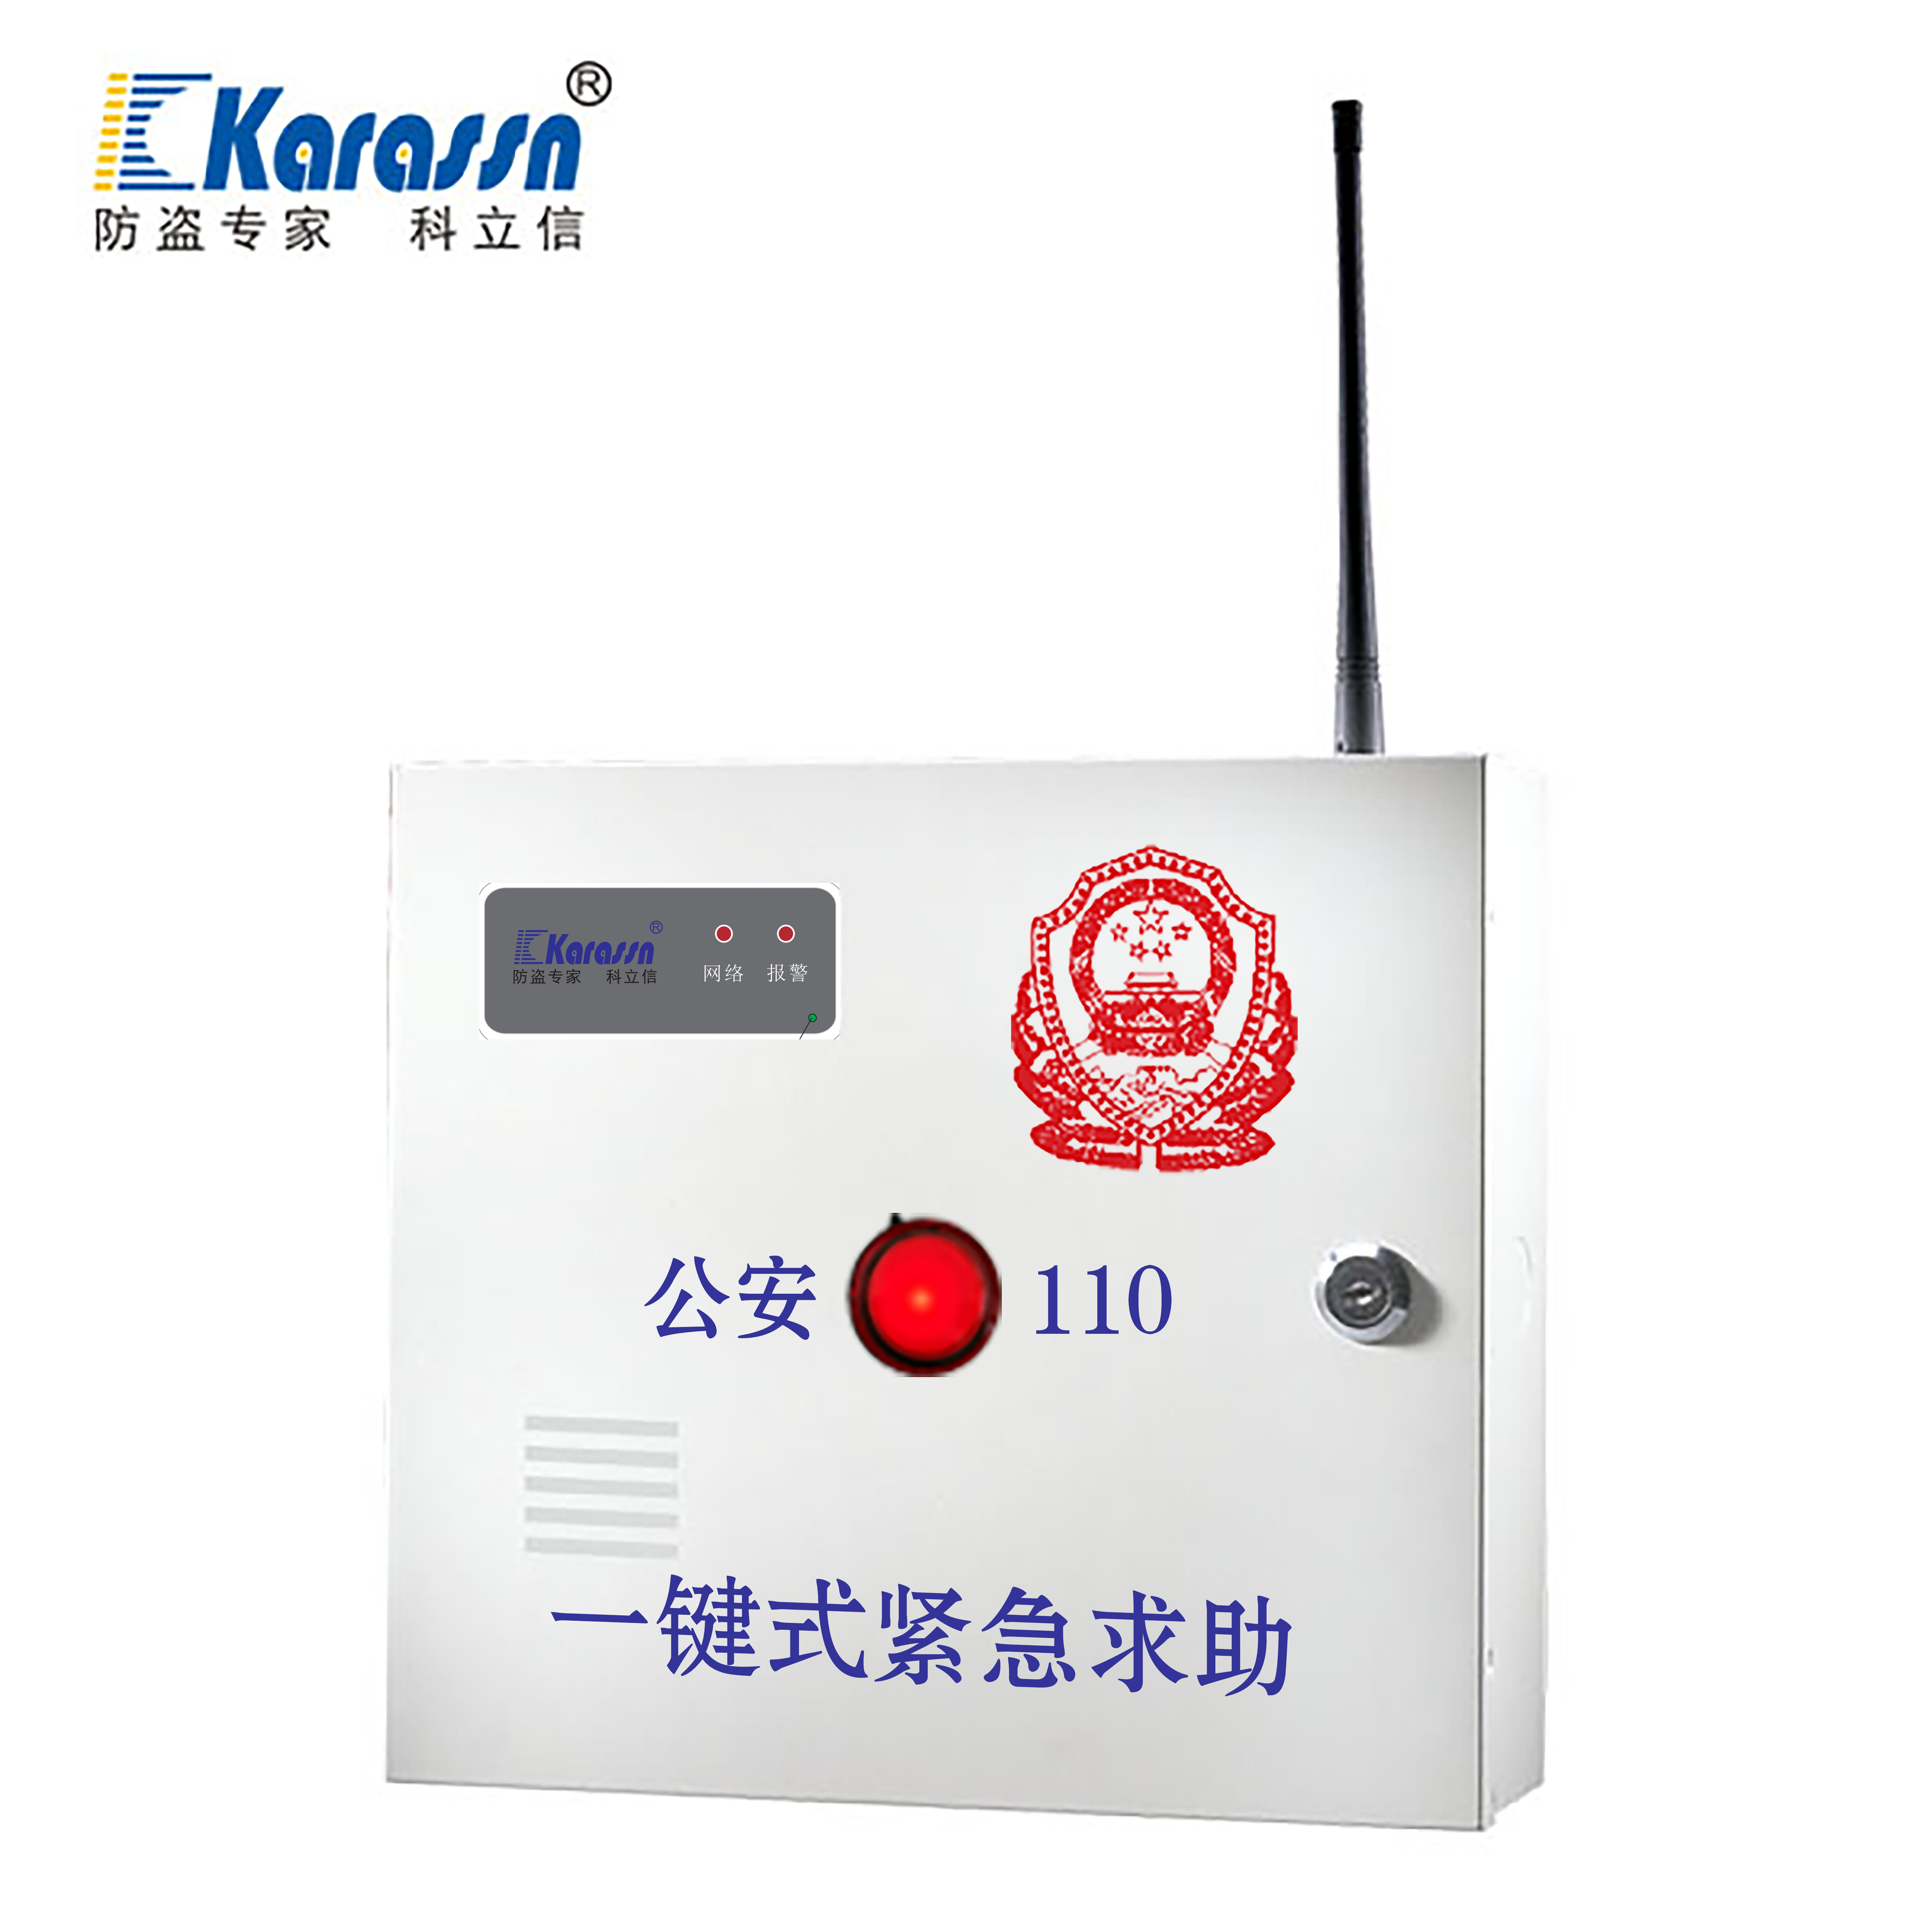 KB-A1799T1 一鍵緊急求助報警控制器